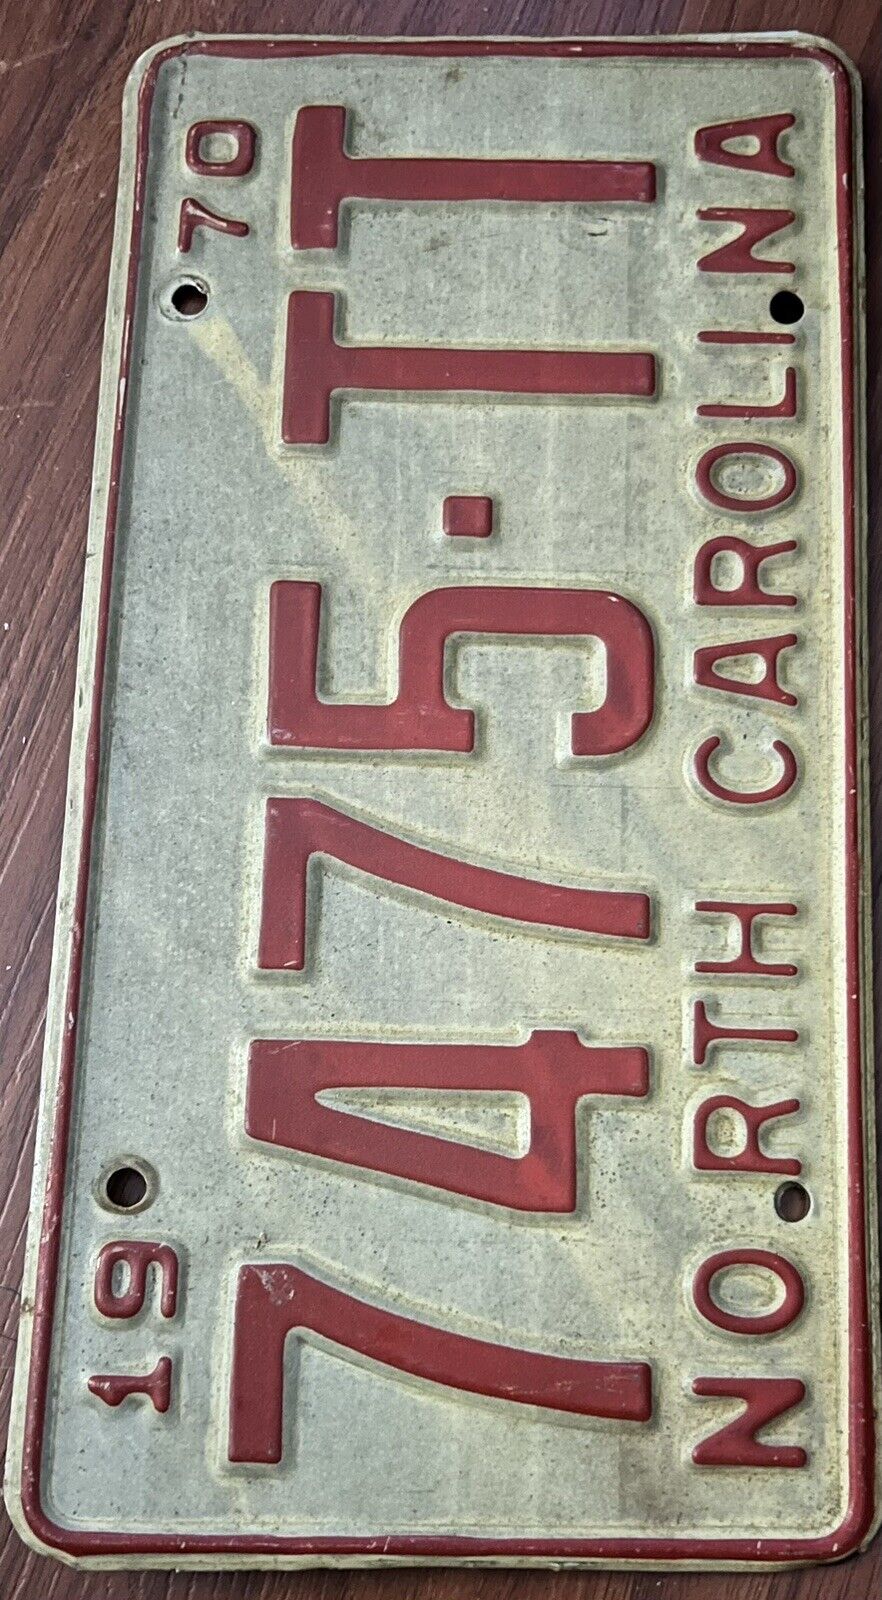 1970 North Carolina license plate